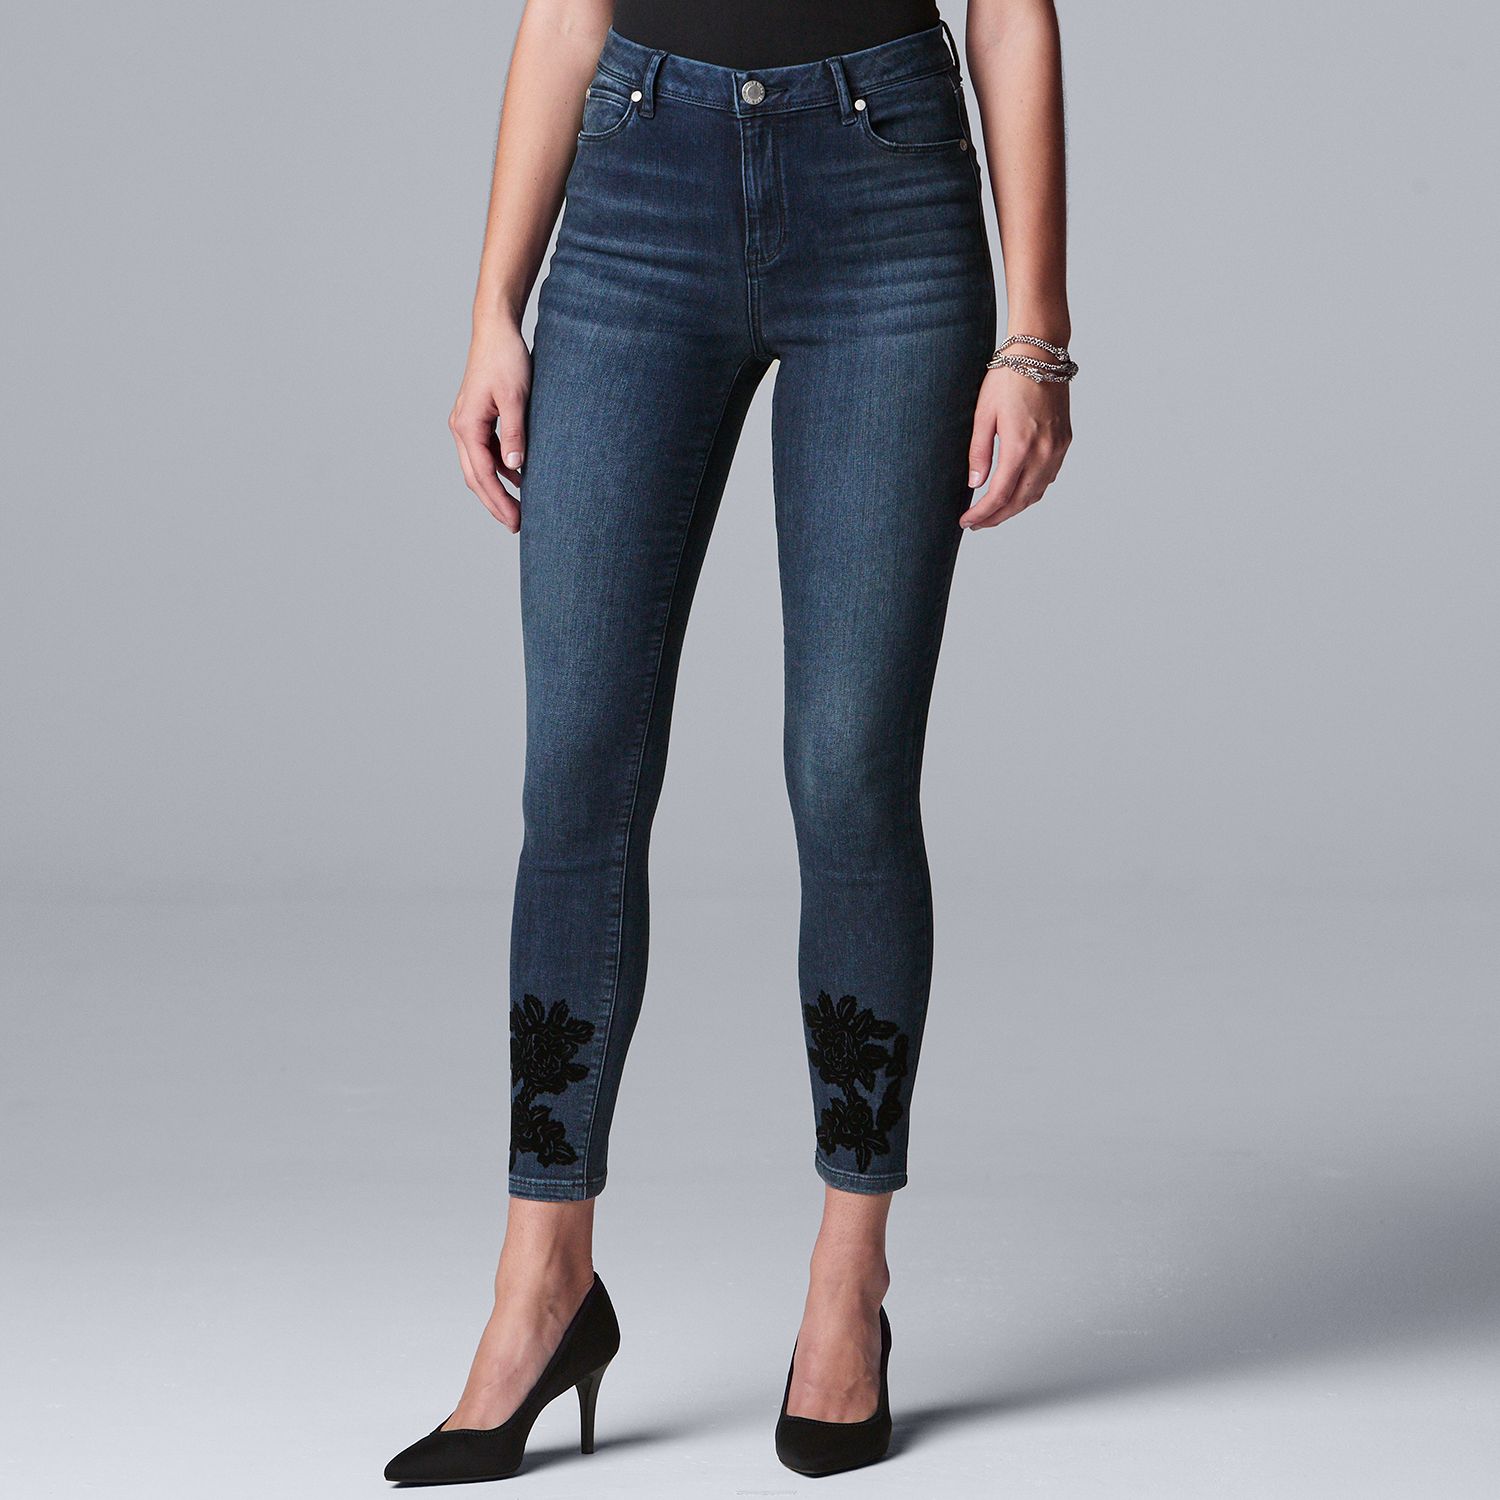 levis 501 dusty black jeans